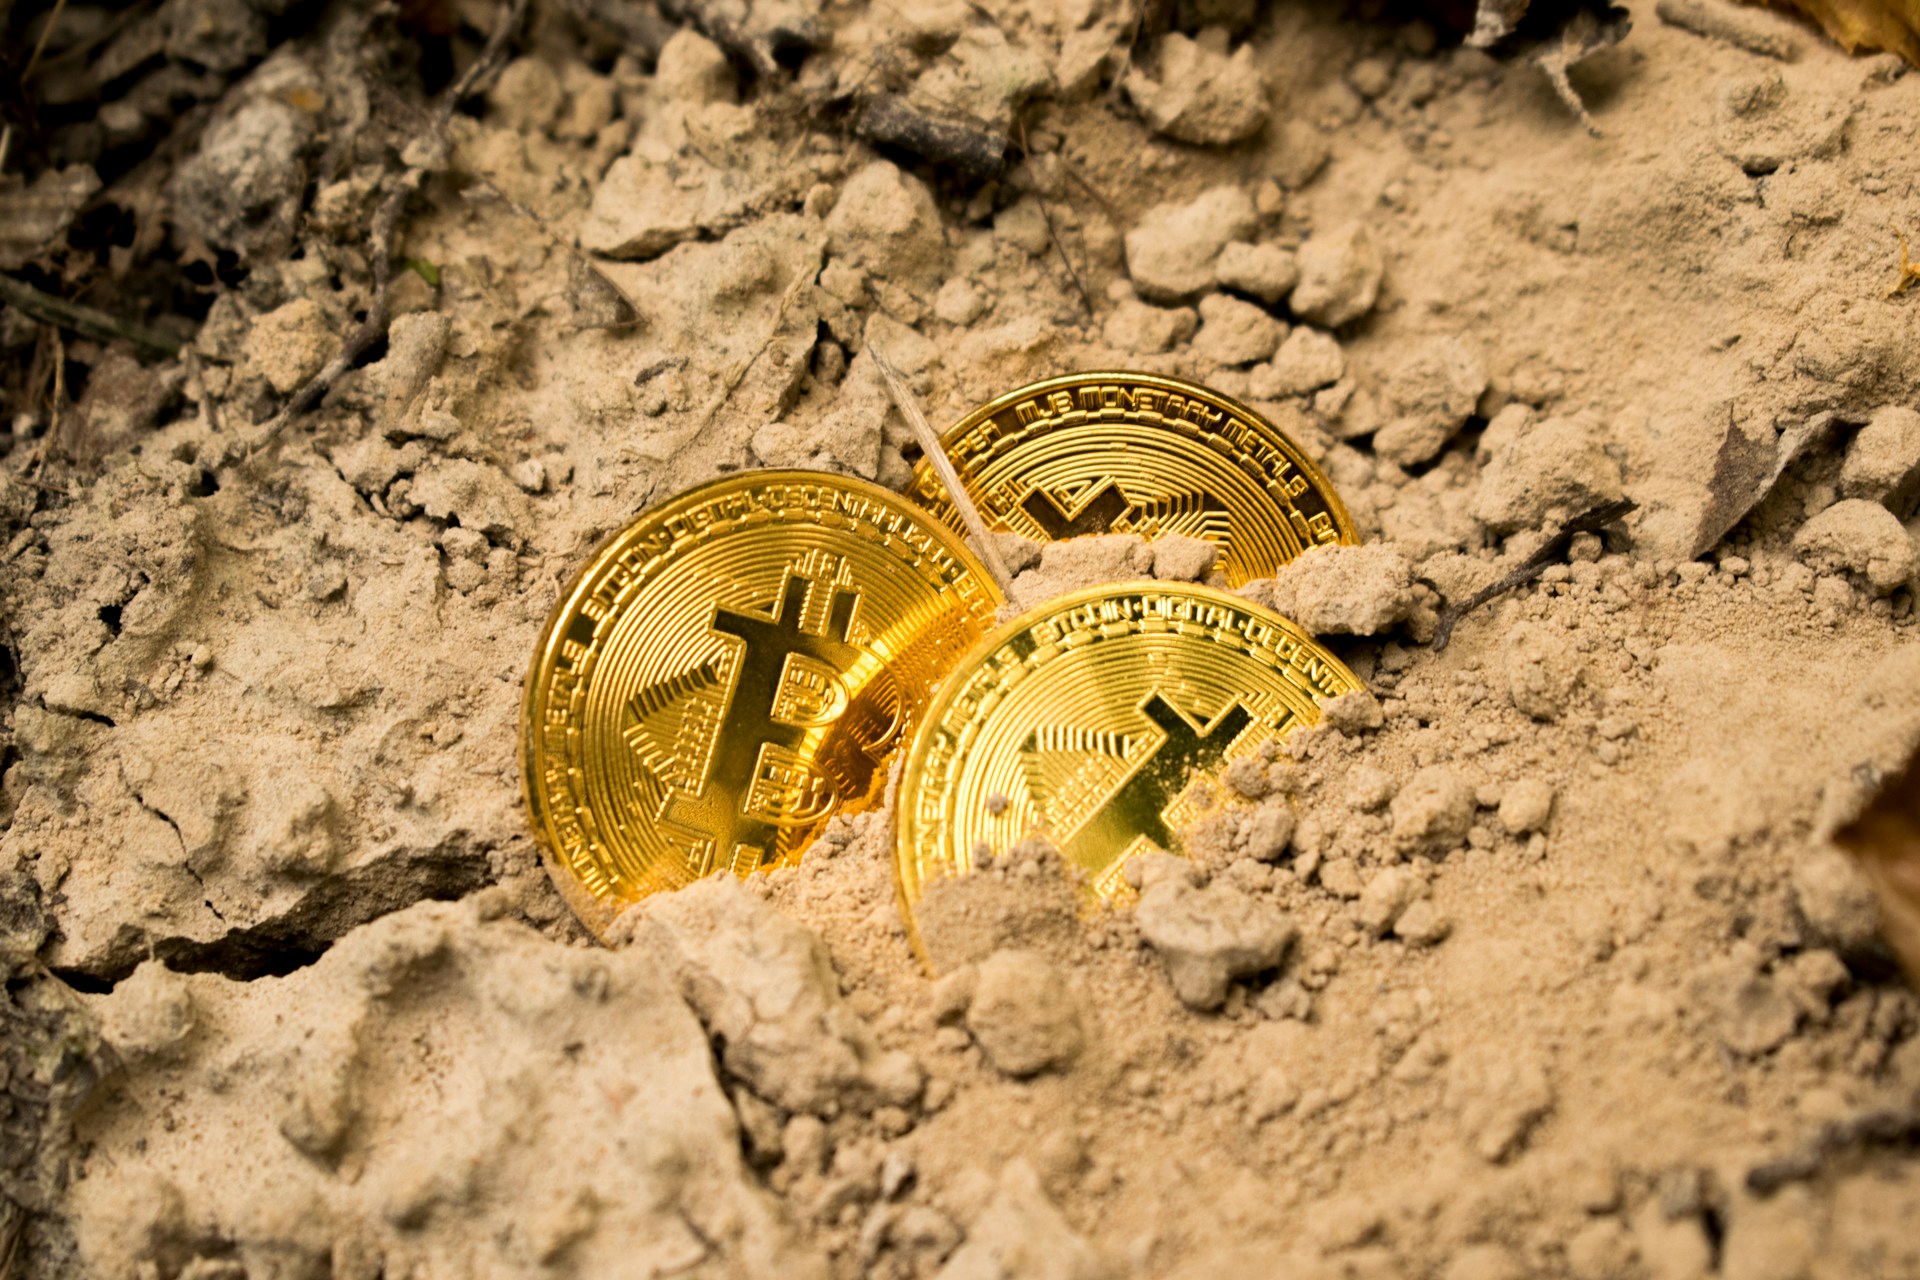 Bitcoin Mining Data Collection On Pause: Judge Halts Mandatory Survey